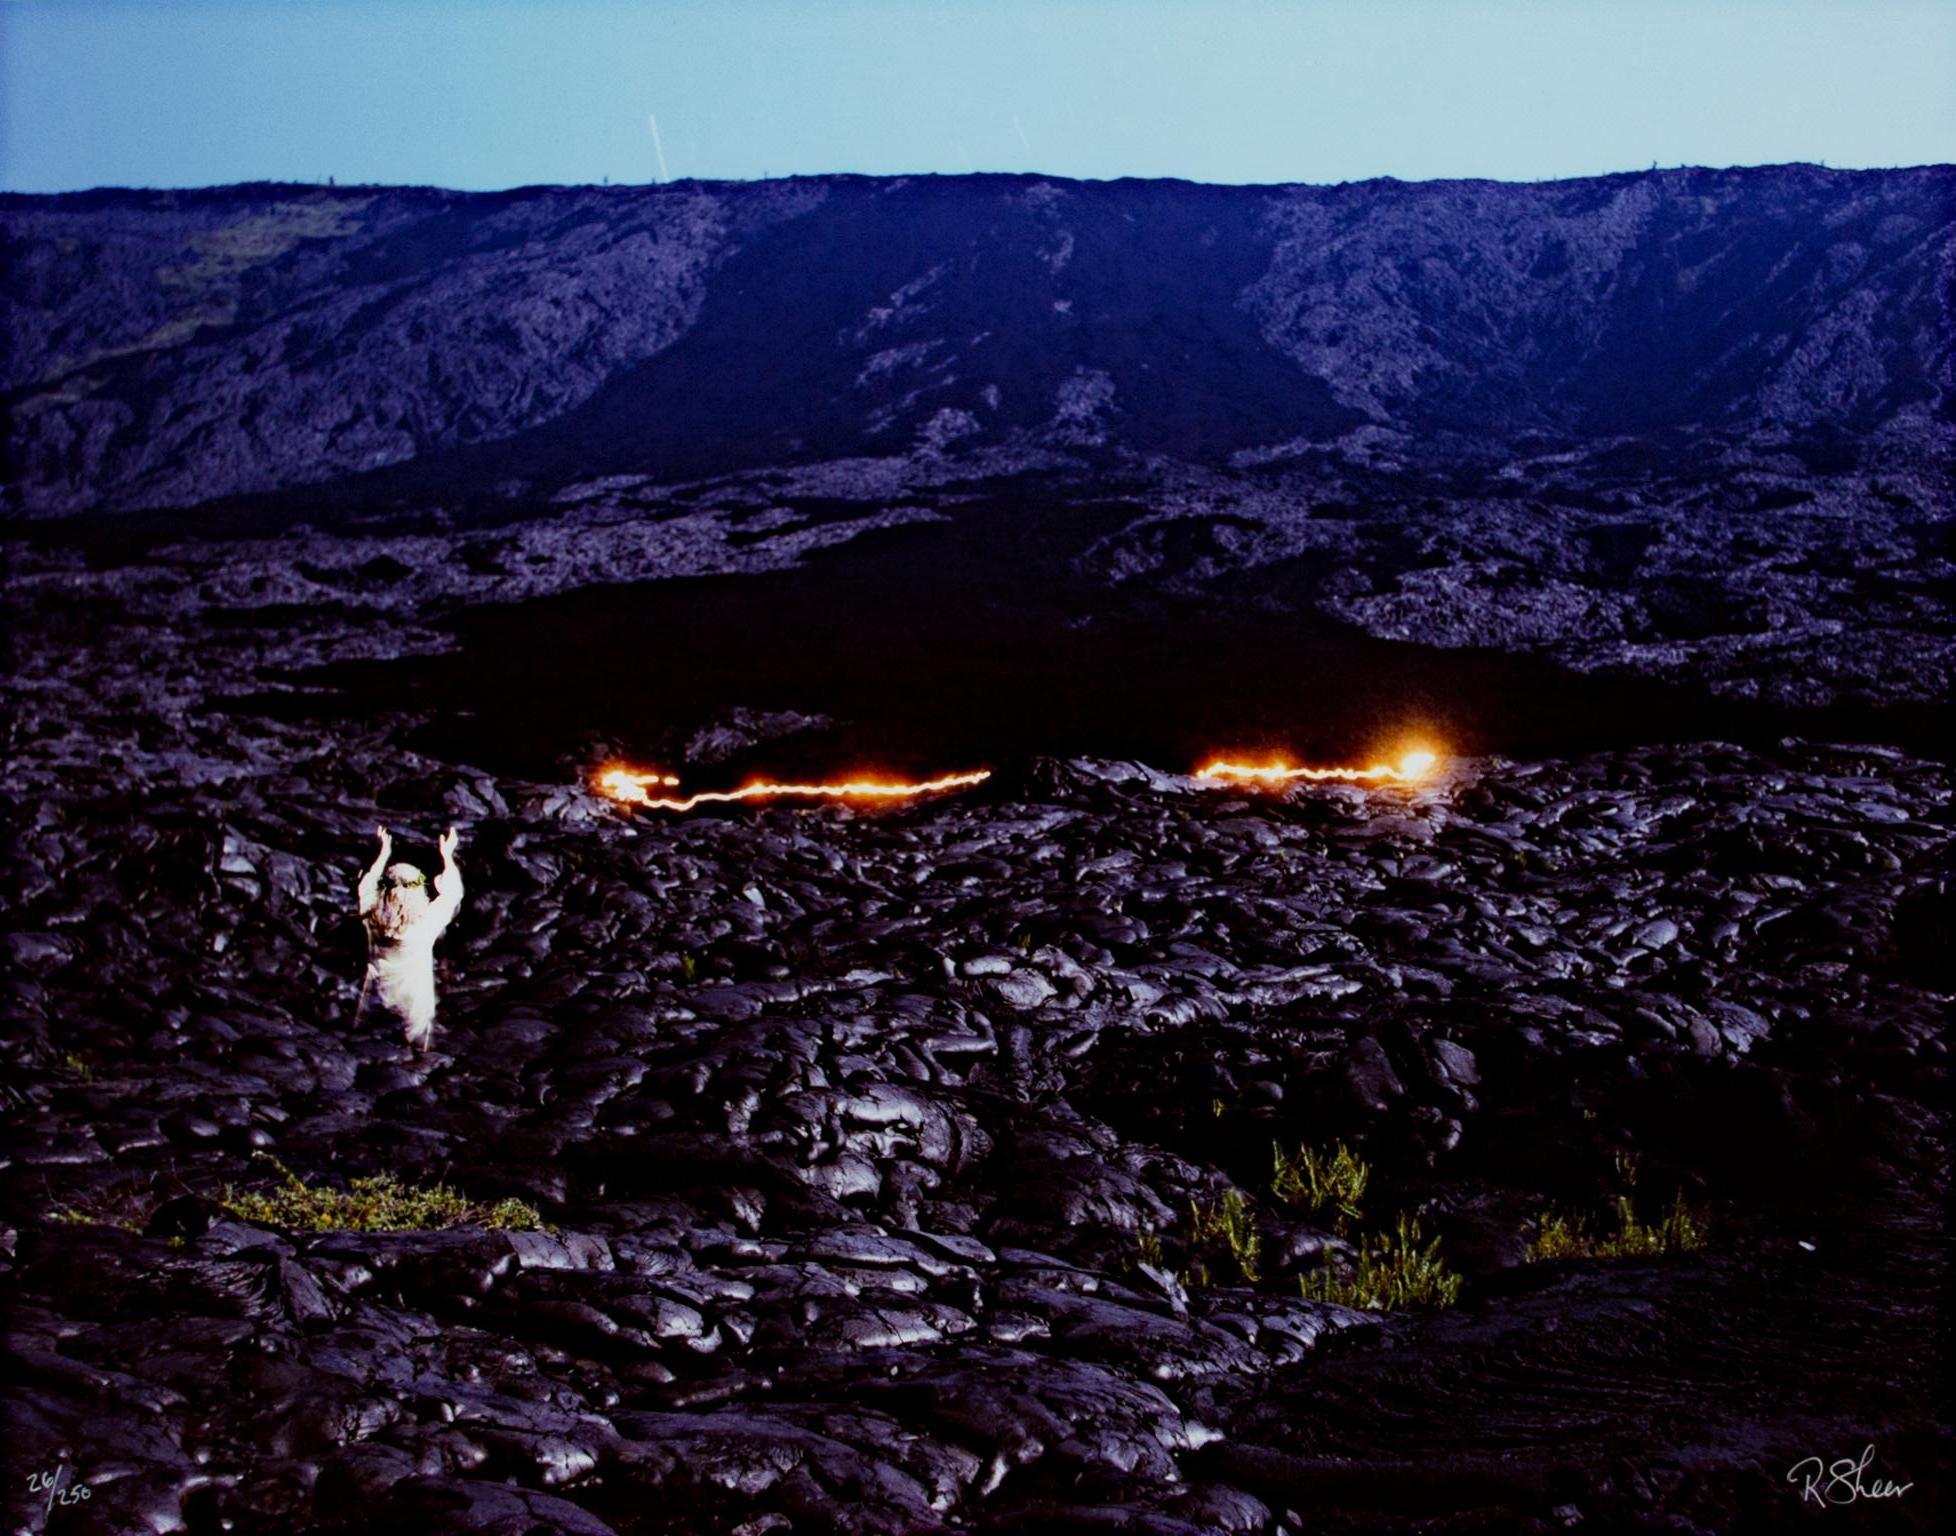 Landscape Photograph Robert Kawika Sheer - Photographie de paysage Contemporary Modern Performance Art Hawaii Travel Signed